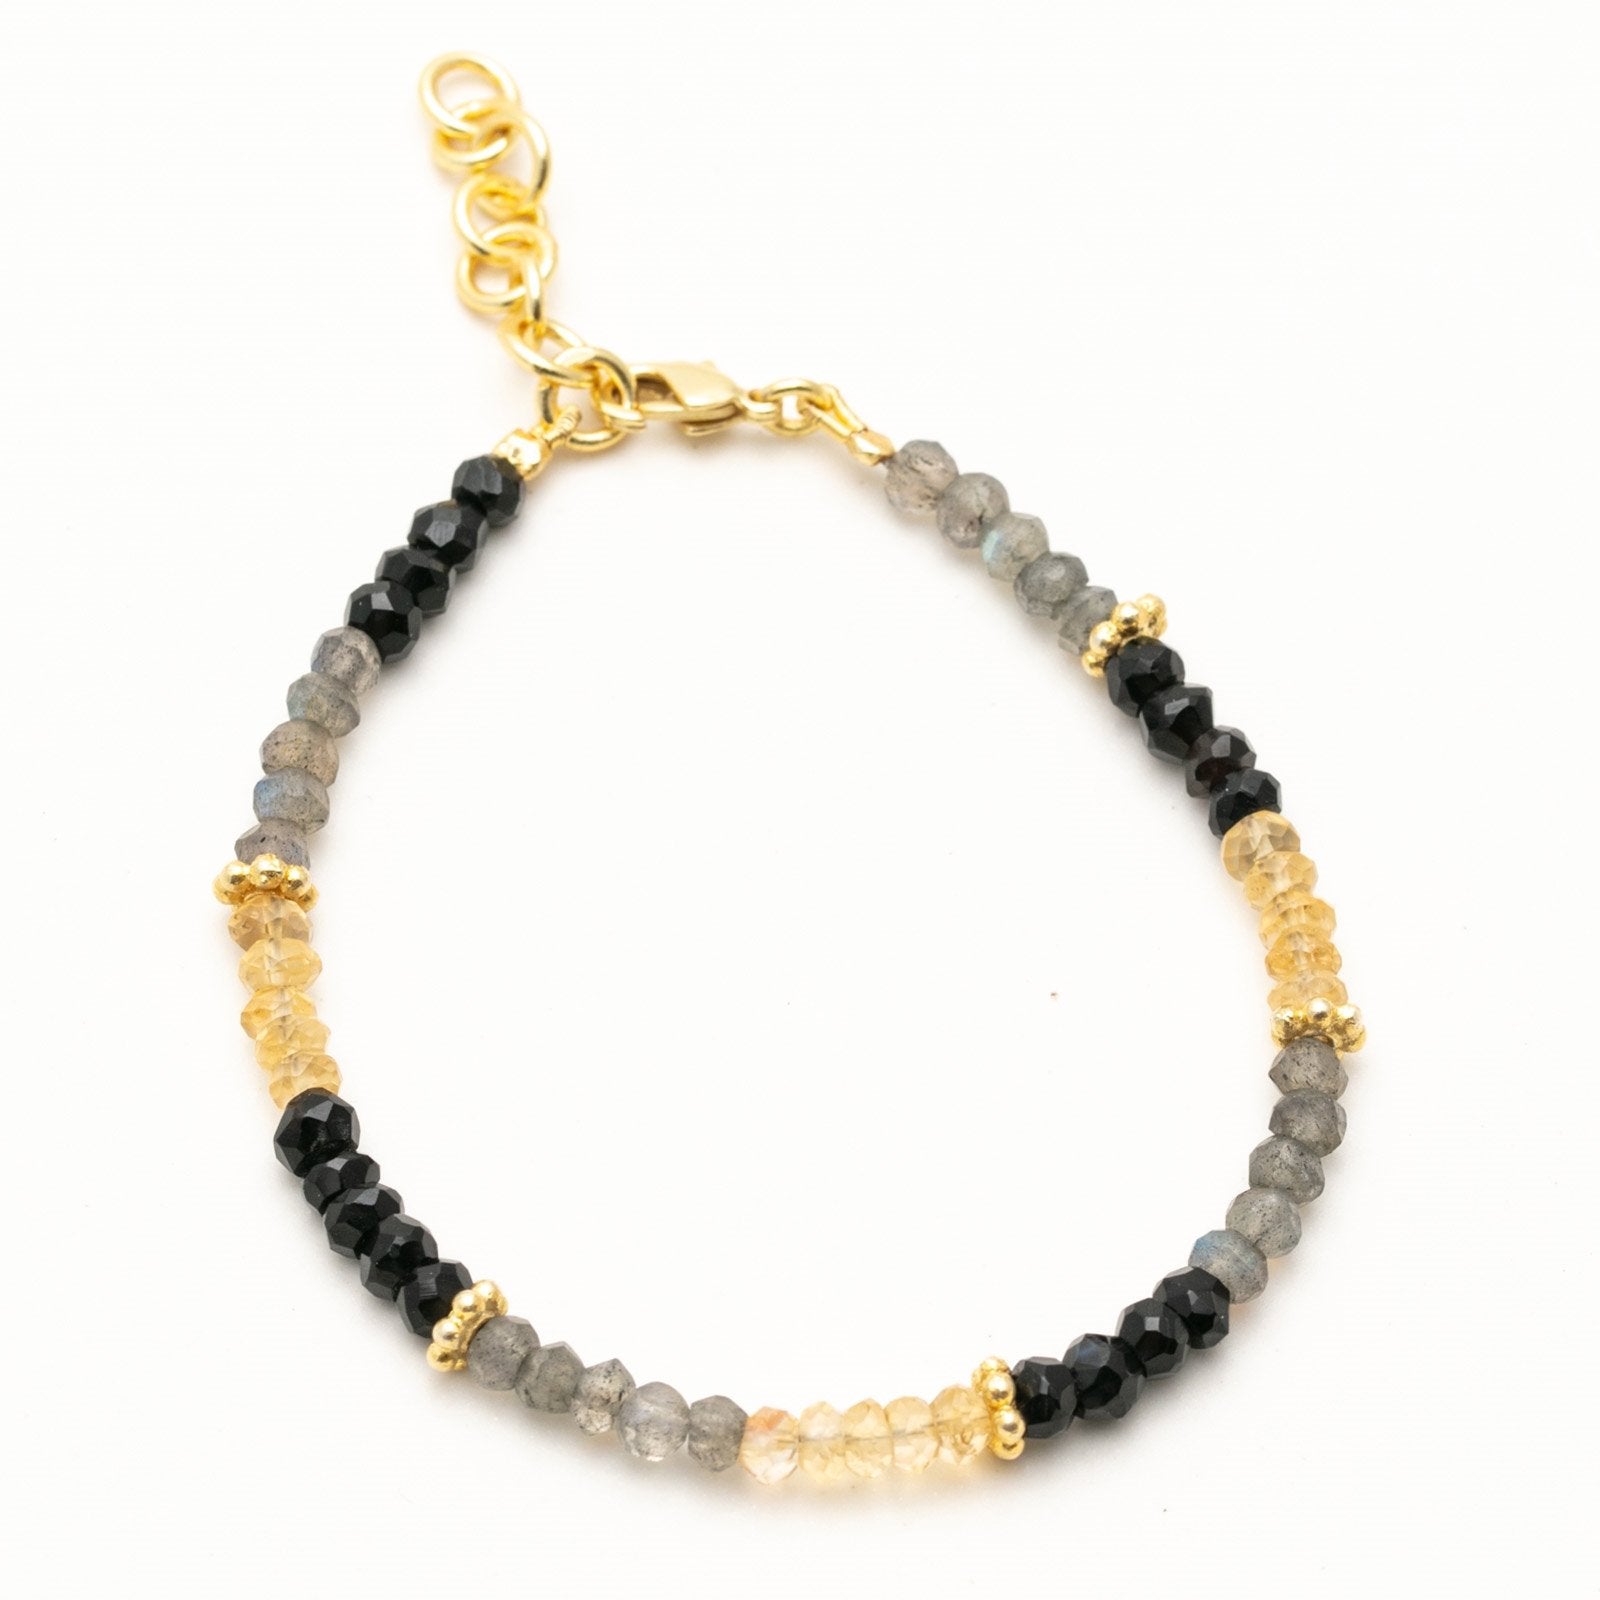 Tri Color Labradorite Black Onyx And Citrine Beaded Bracelet With 18K Gold Plated Extender Chain Bracelet - rockflowerpaper